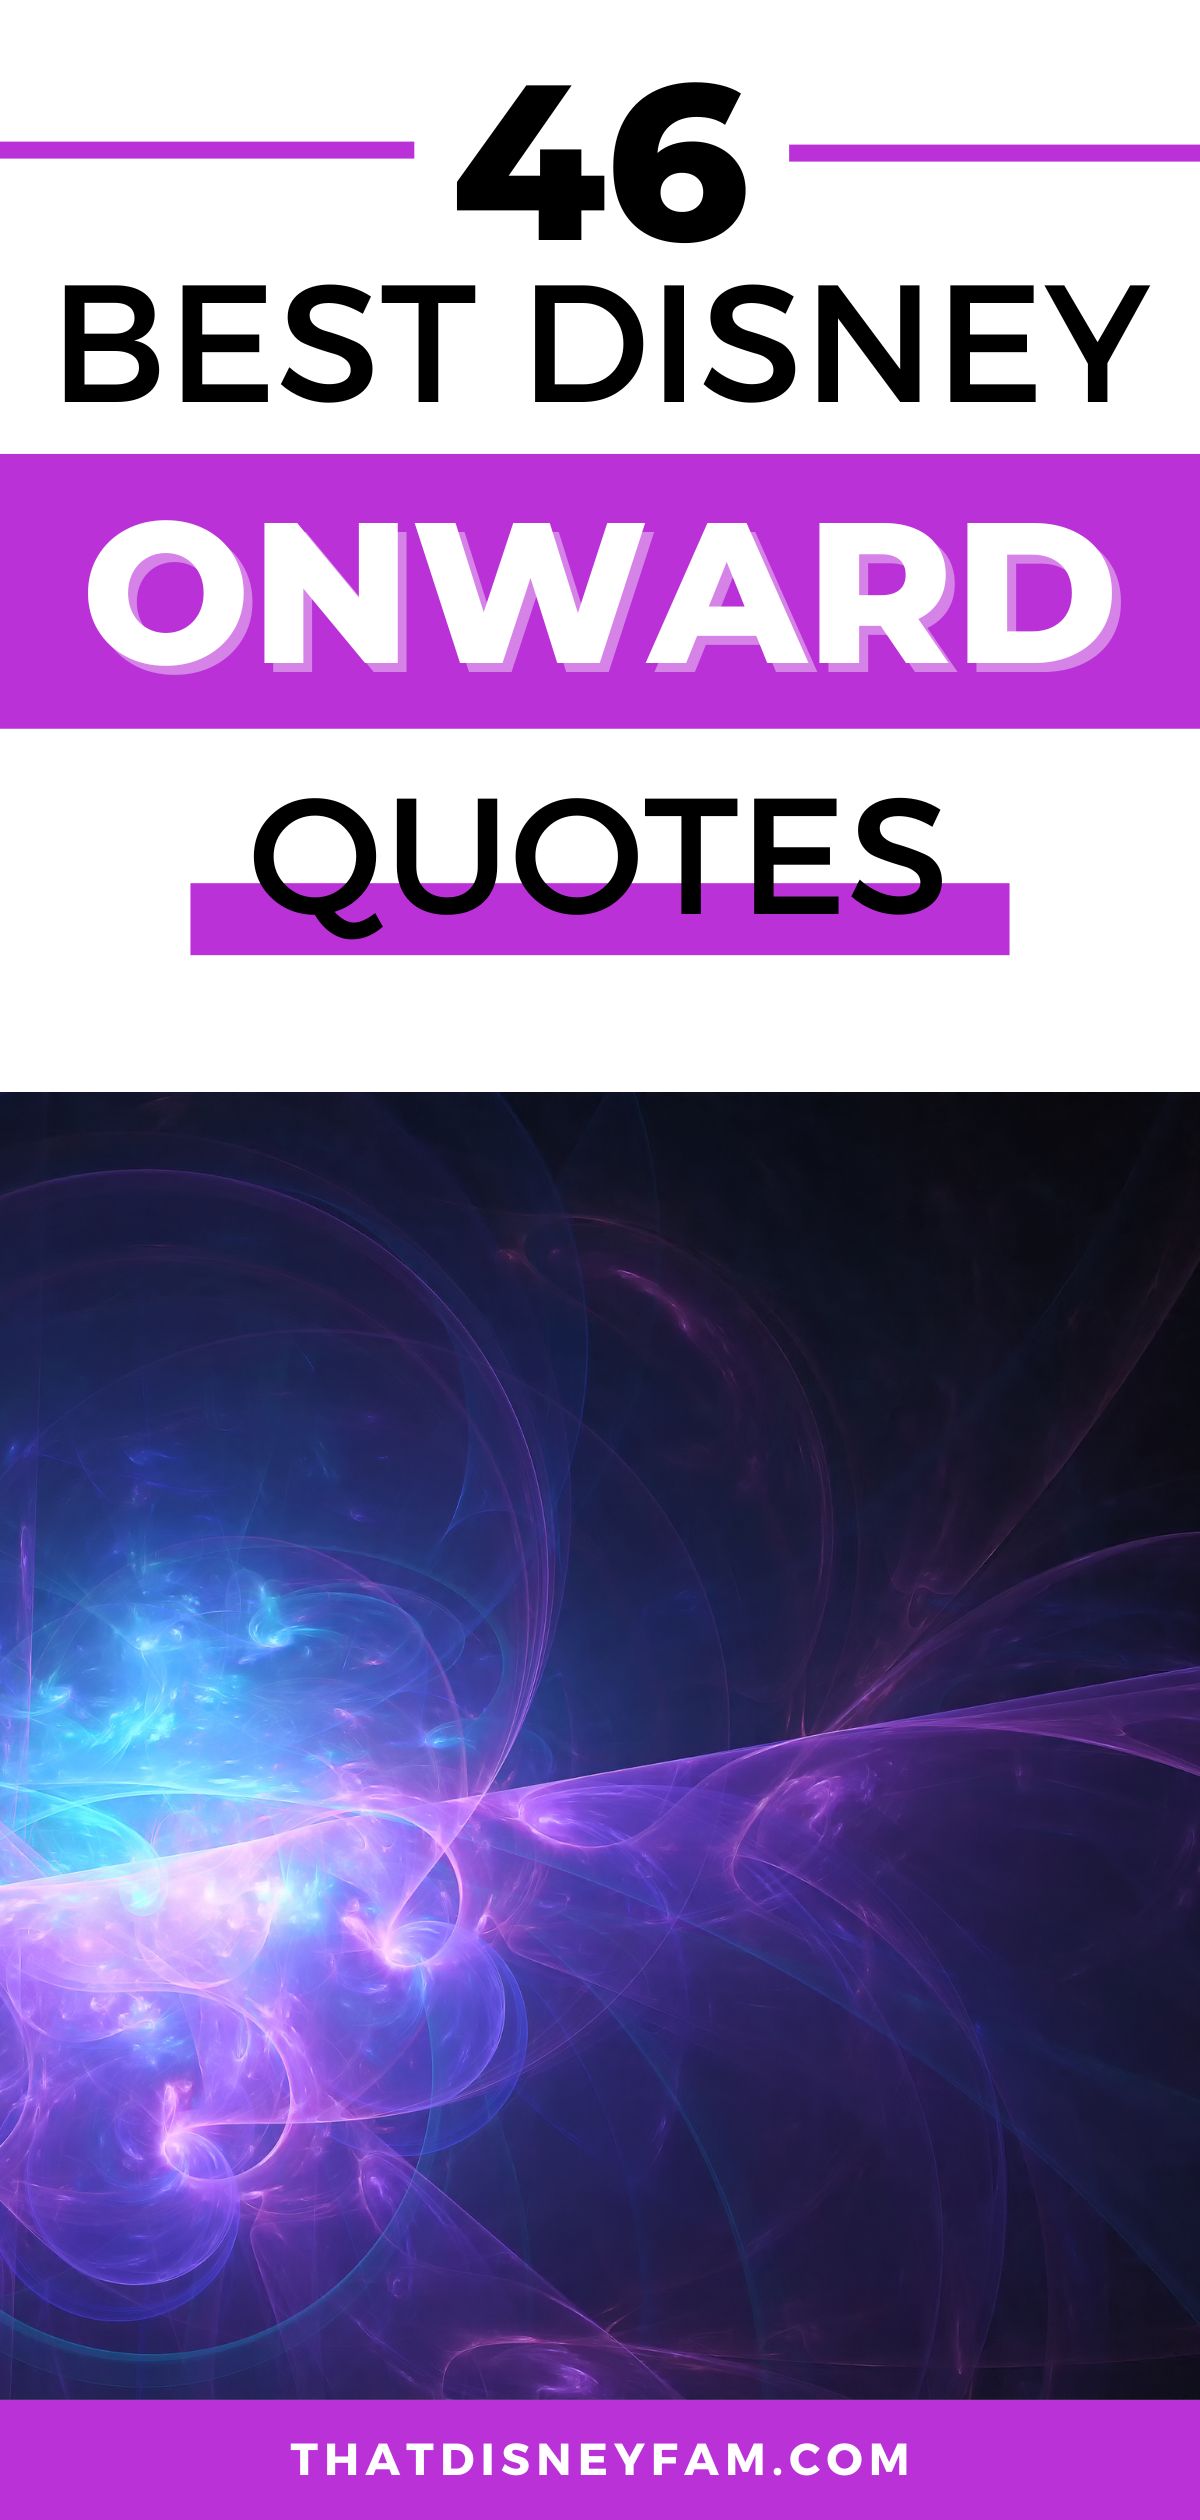 onward quotes